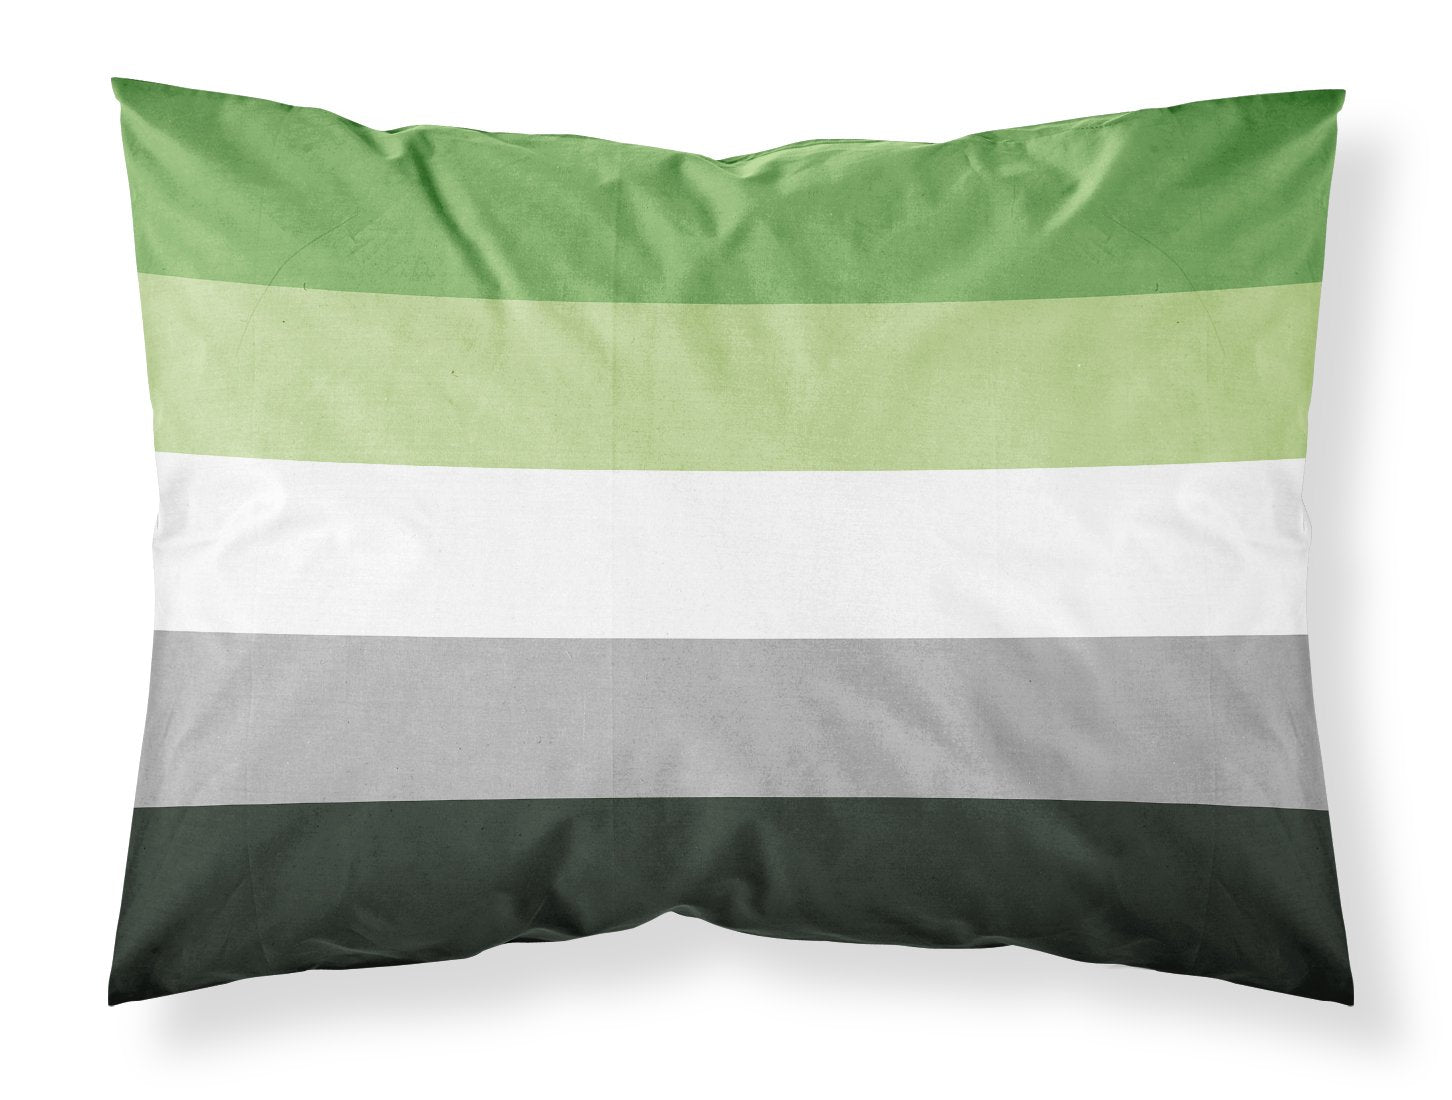 Buy this Aronmantic Pride Fabric Standard Pillowcase